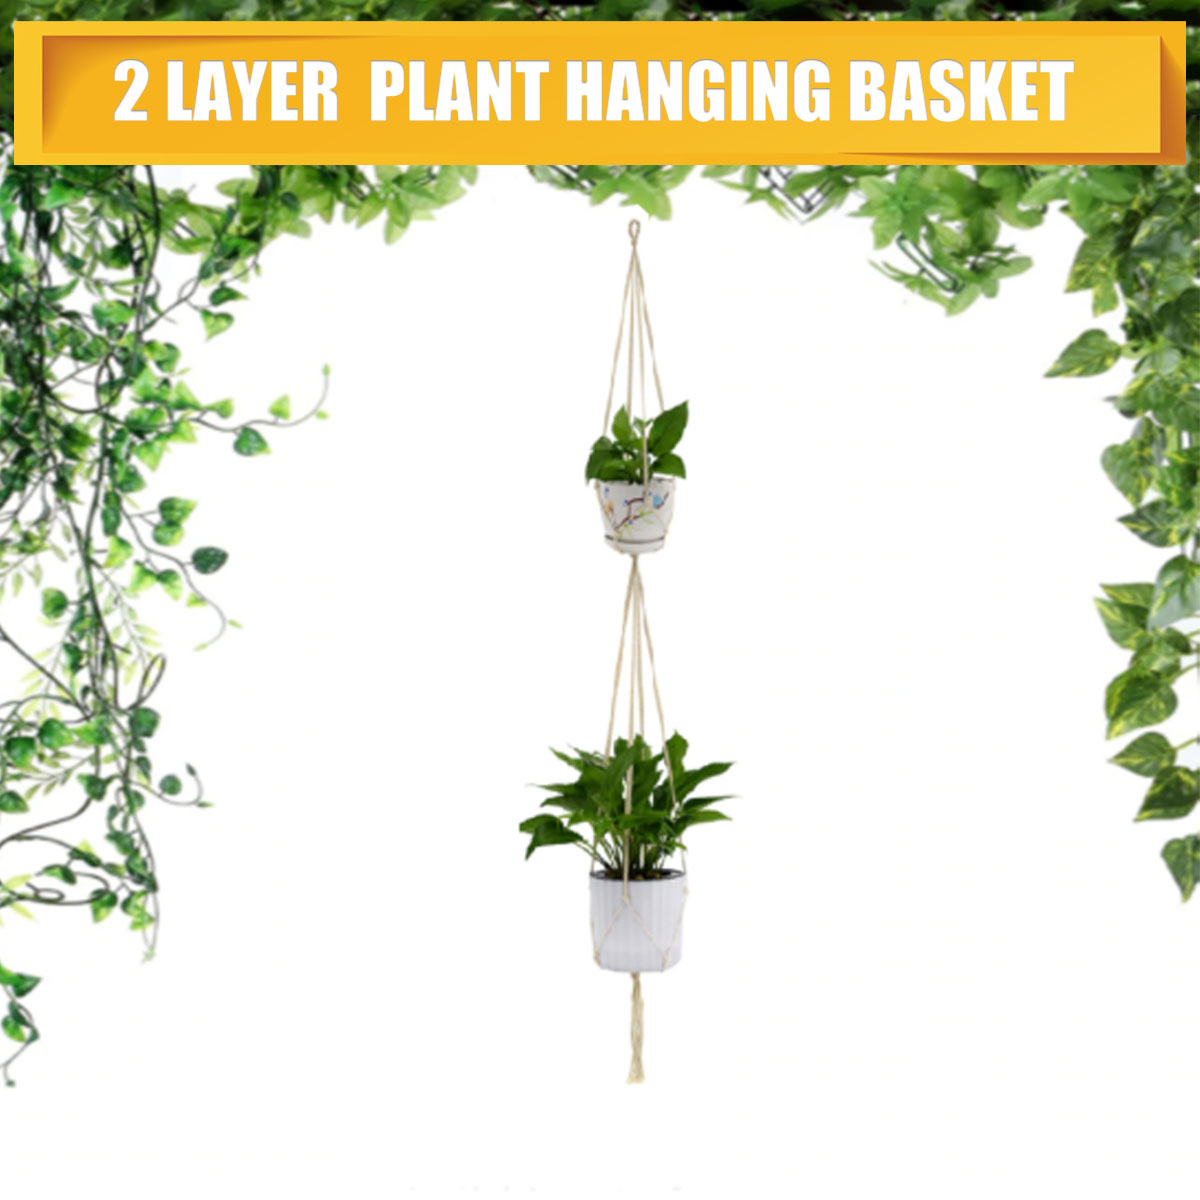 2PCS 2 Layer Macrame Plant Hanger Garden Indoor Hanging Planter Basket Rope